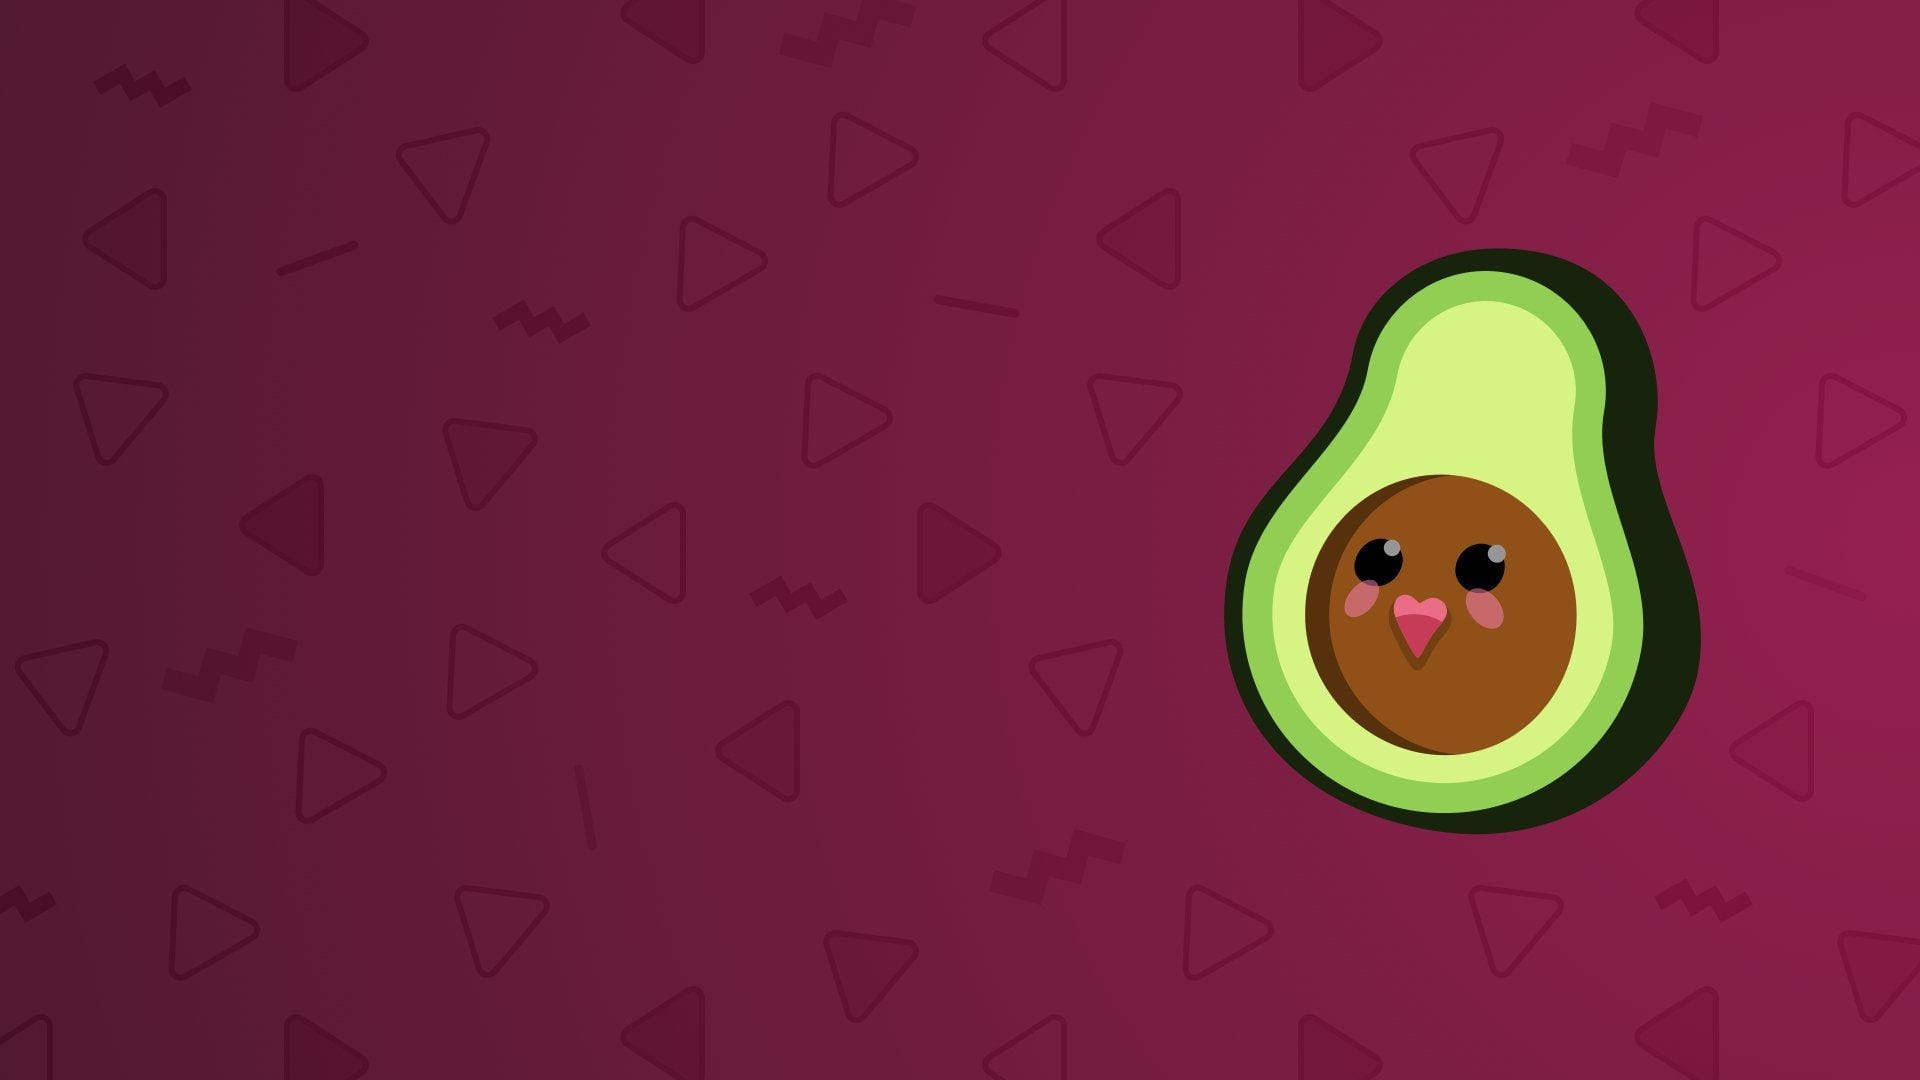 Free Cute Avocado Wallpaper Downloads, [100+] Cute Avocado Wallpapers for  FREE 